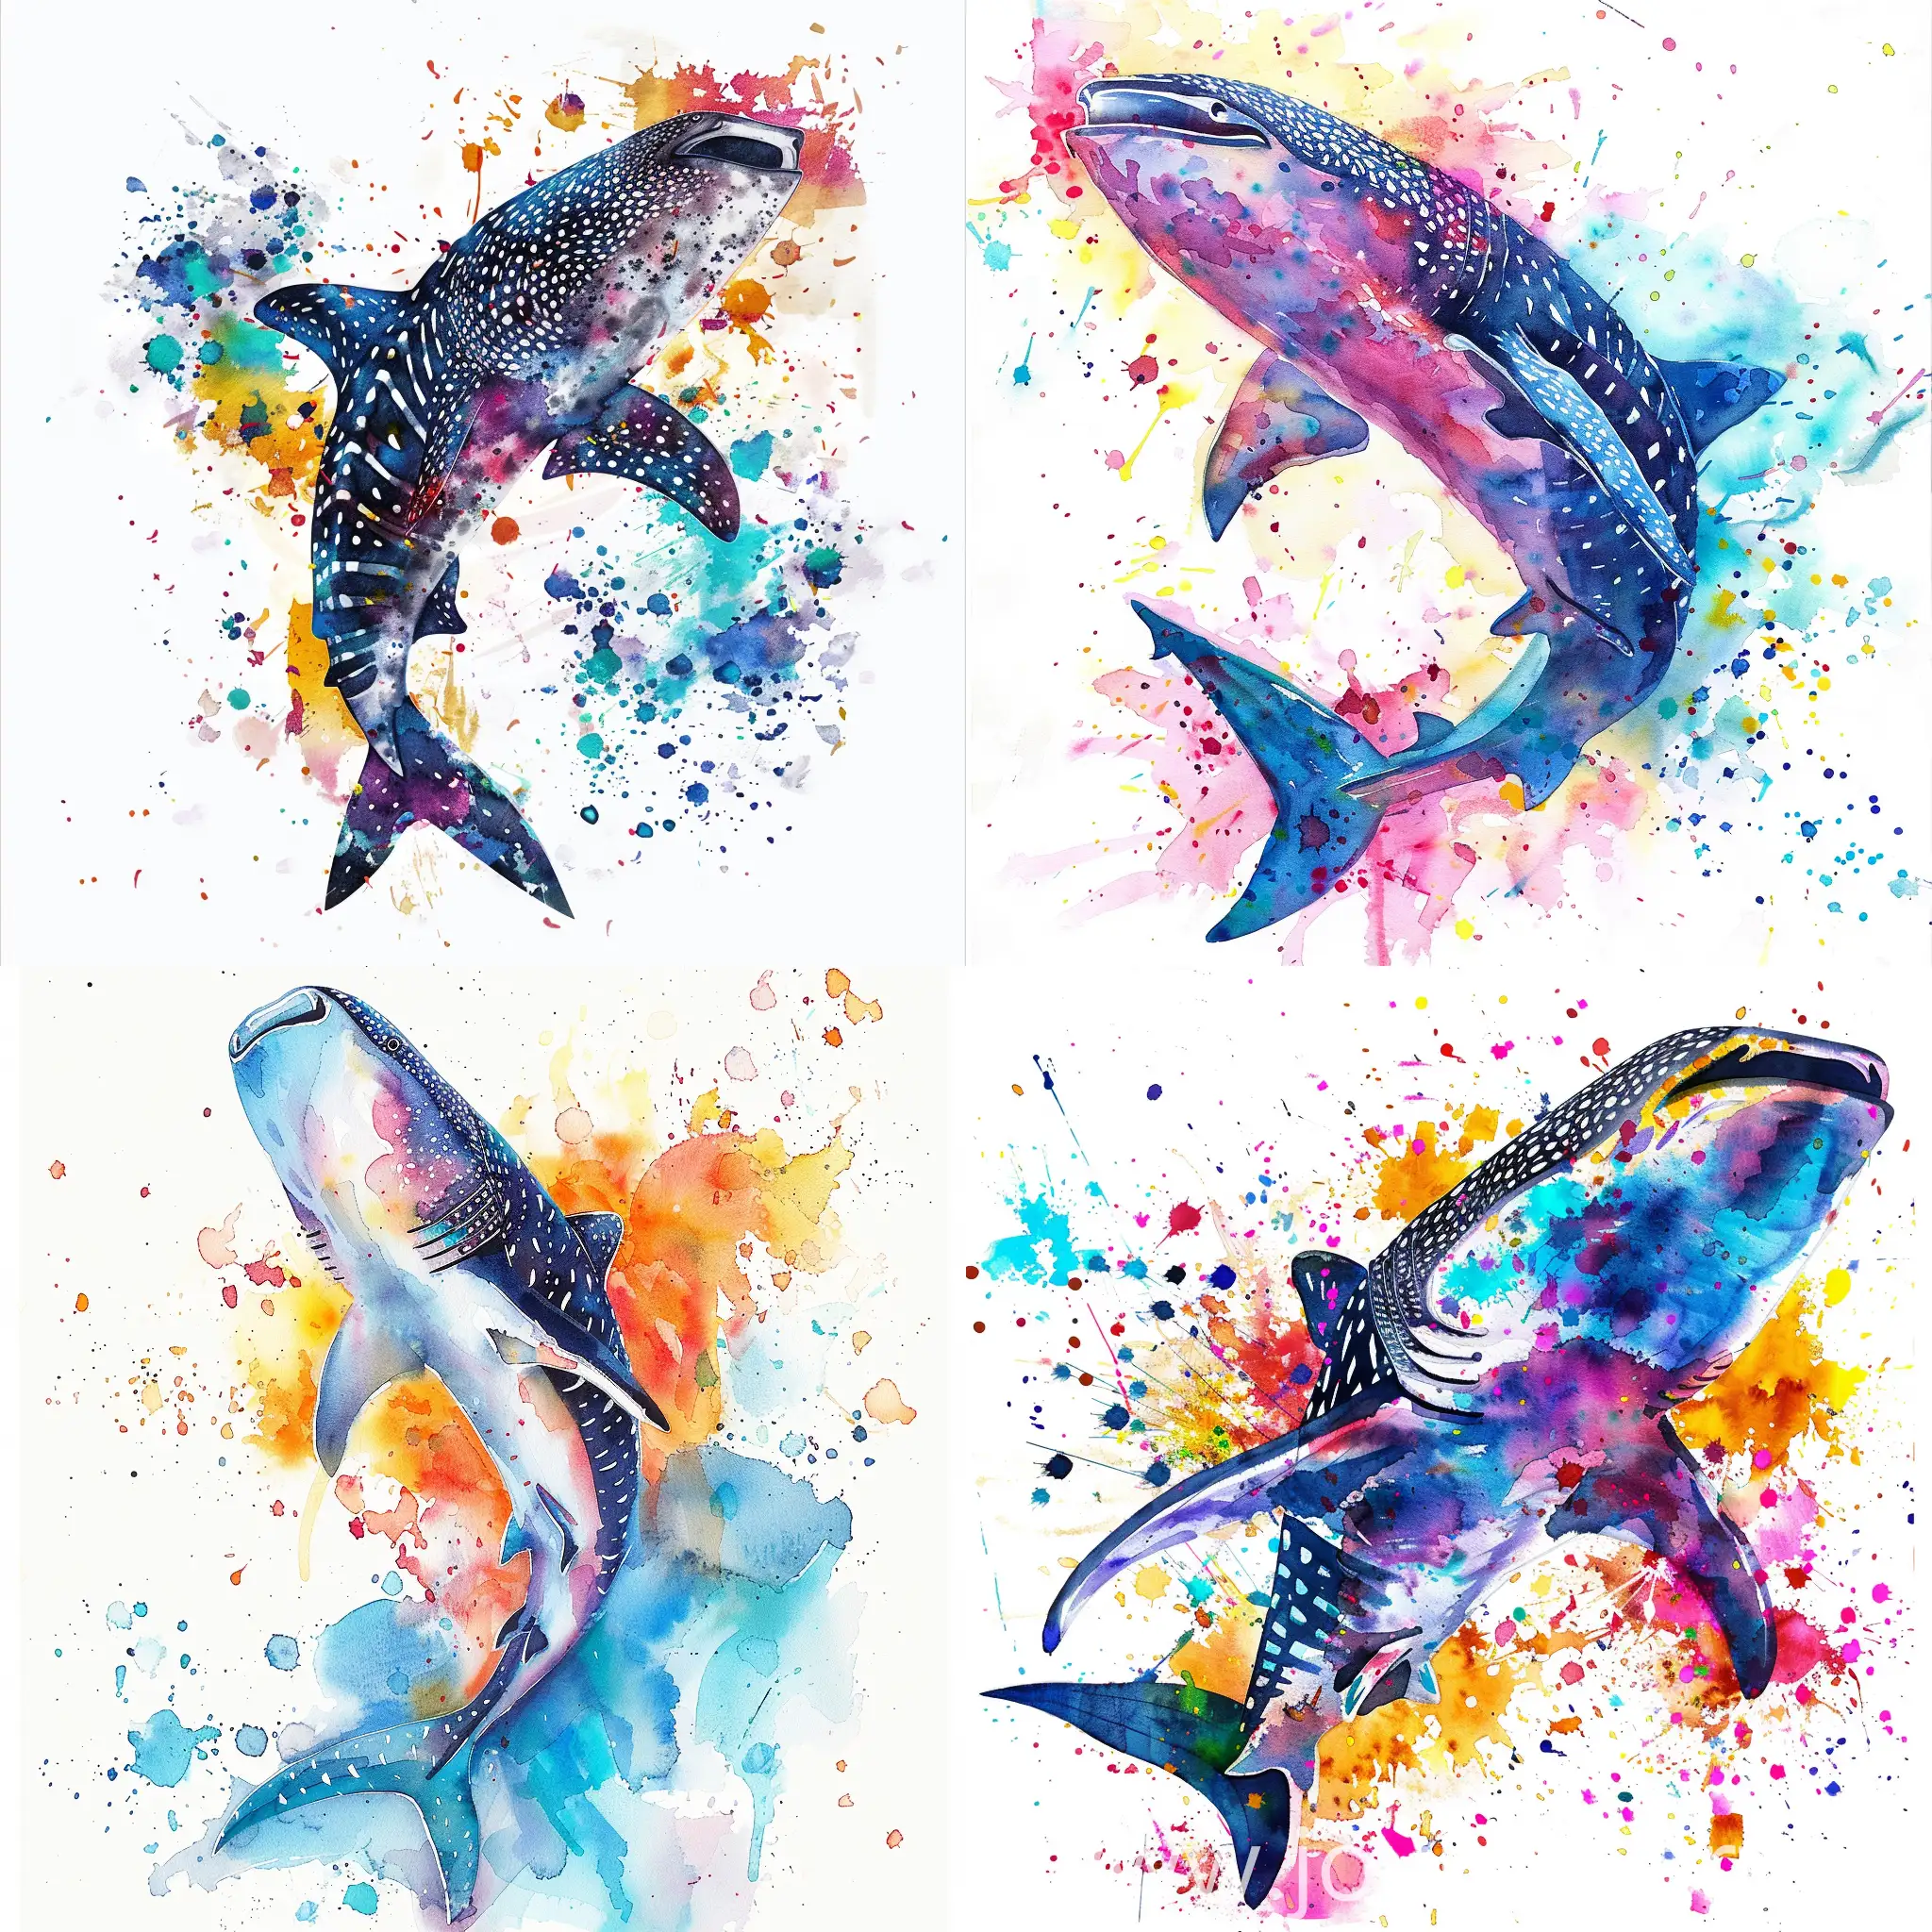 whale shark watercolor image, vibrant colors, artistic
